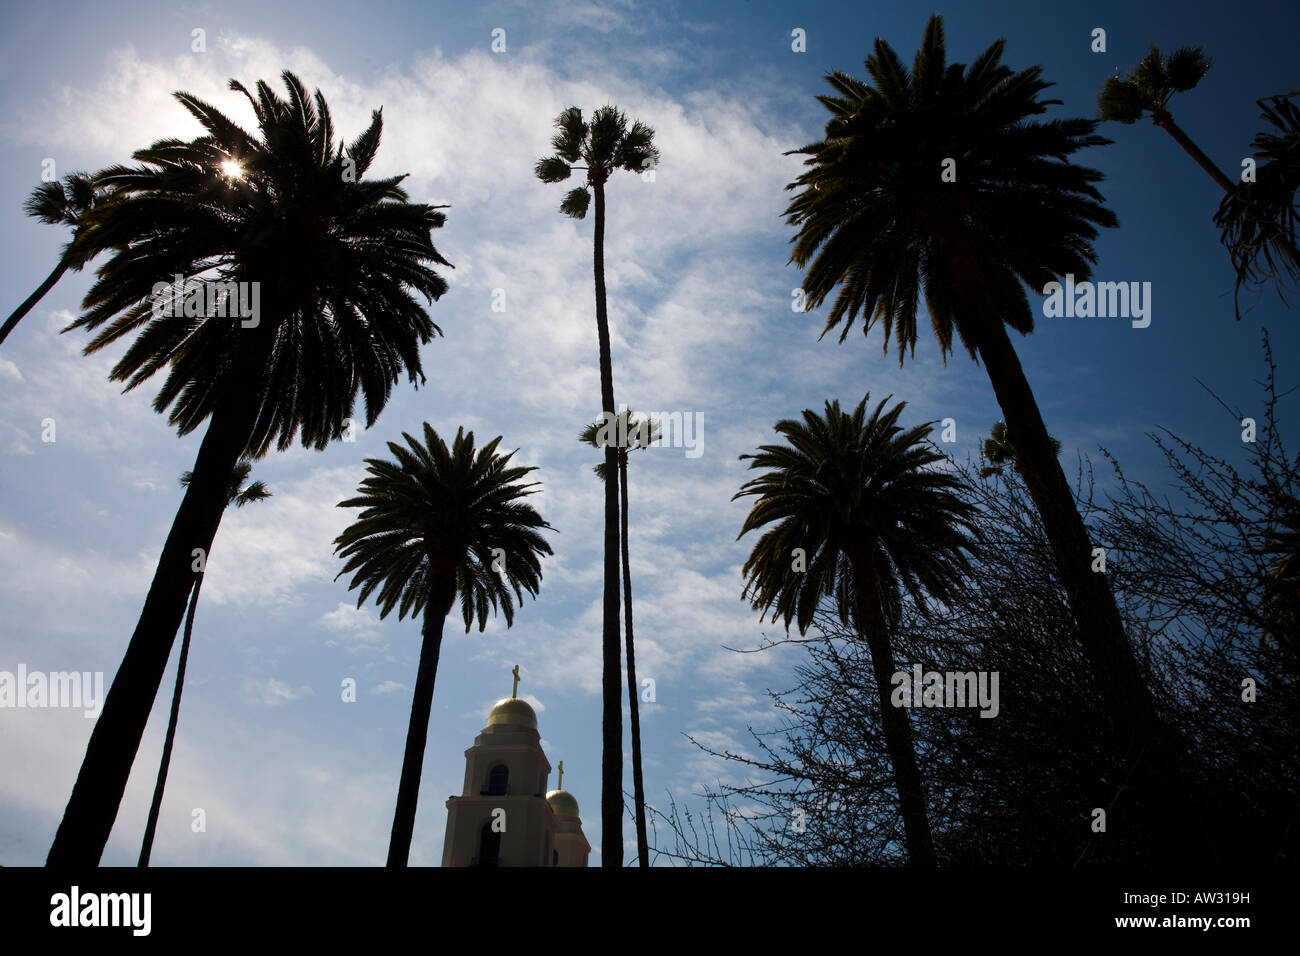 Palm Trees outside of The Good Shepherd Catholic Church Beverly Hills California United States Stock Photo